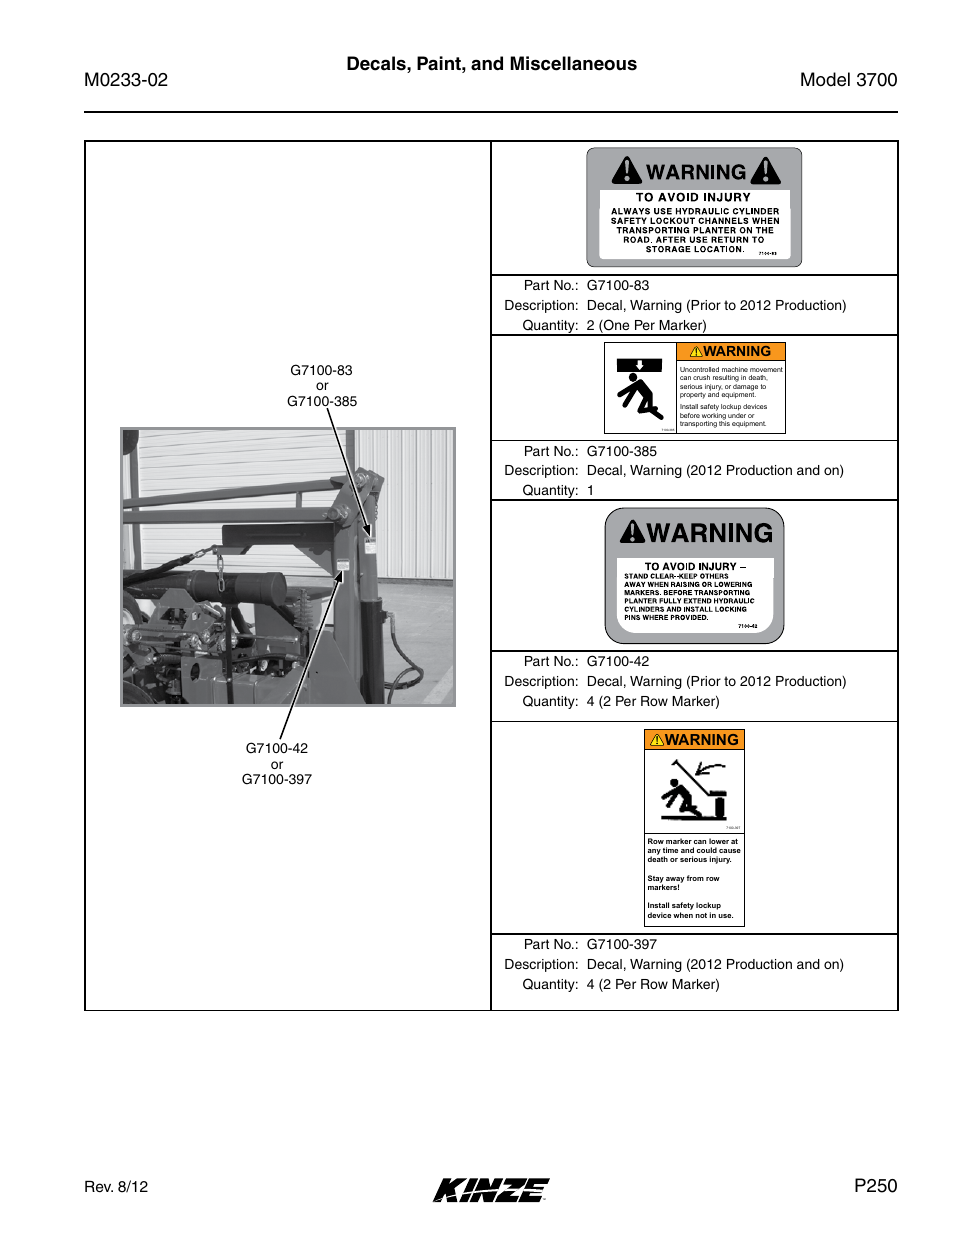 P250 | Kinze 3700 Front Folding Planter Rev. 6/14 User Manual | Page 253 / 284